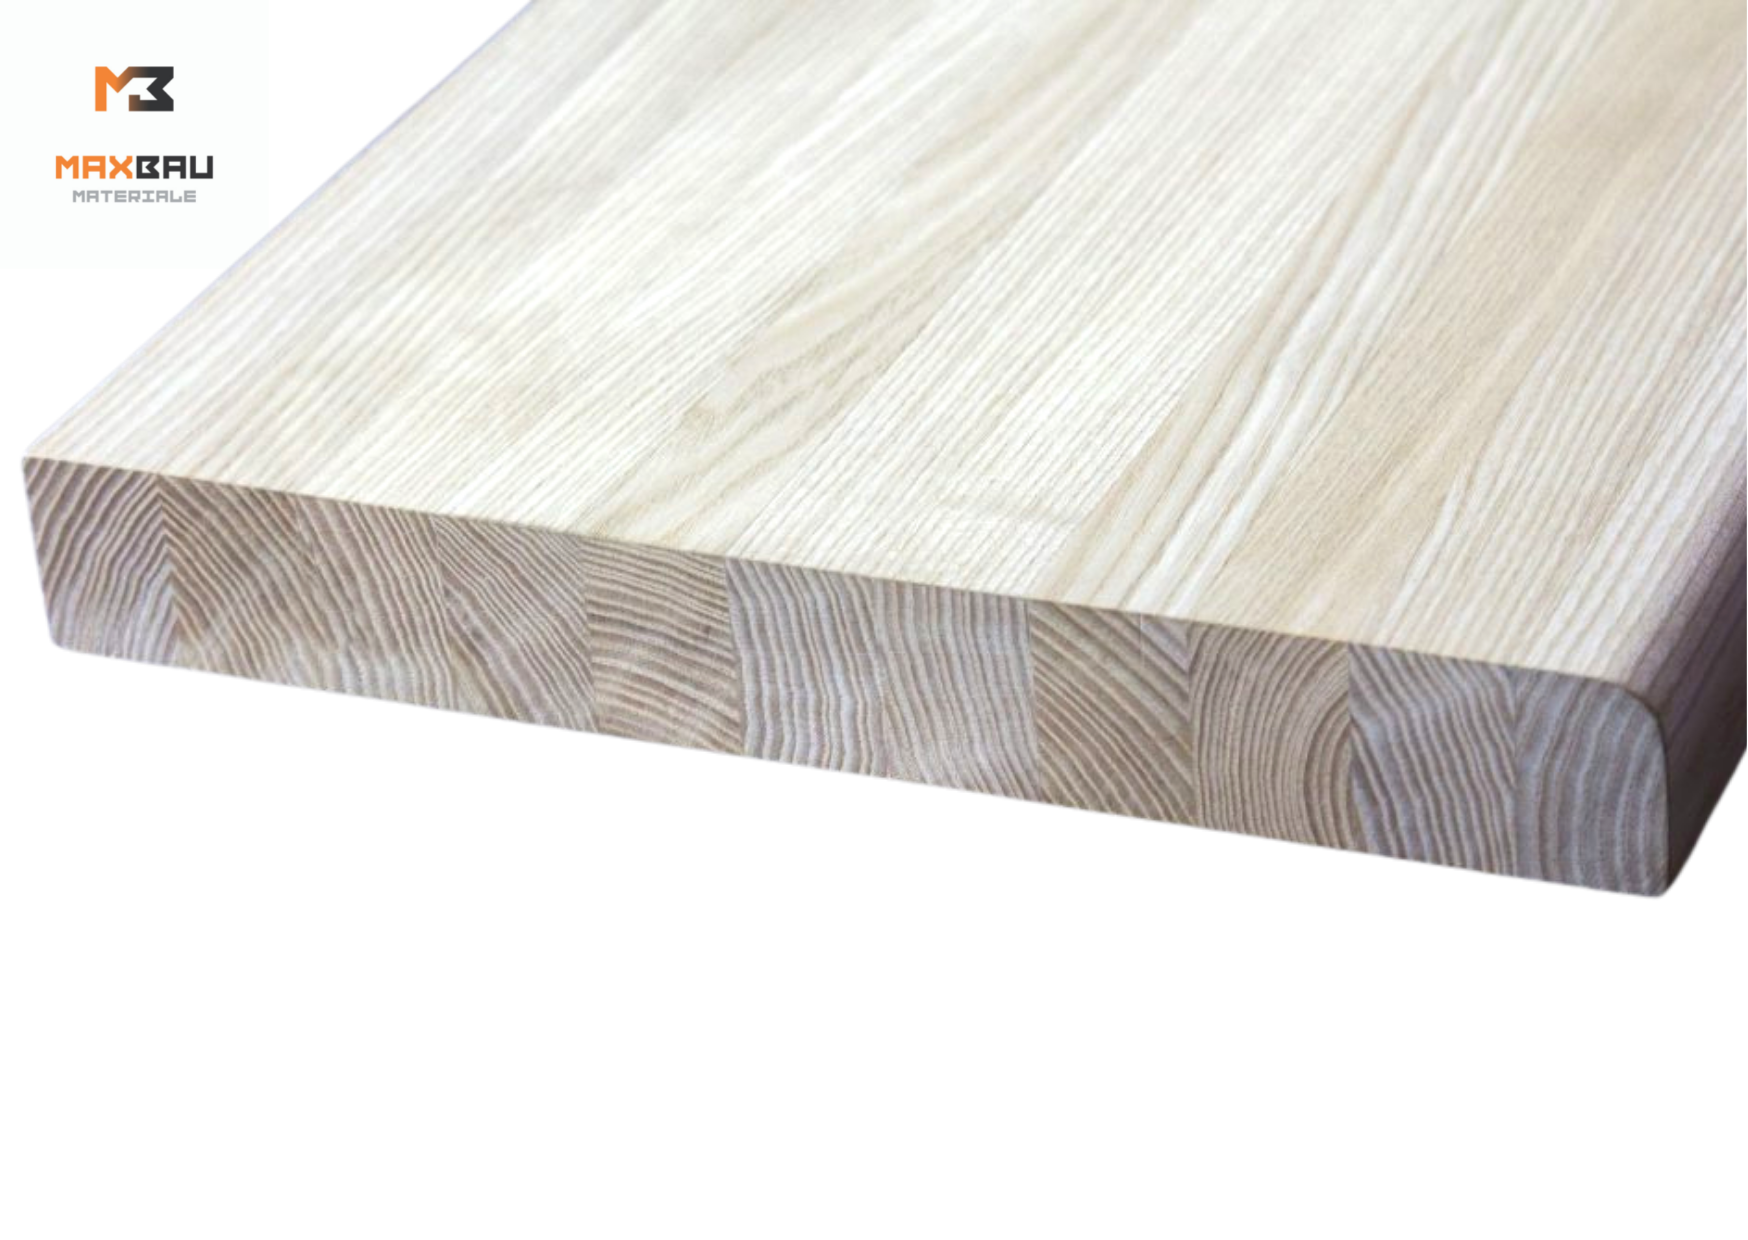 Placi din lemn incleiat - Placa de lemn incleiat MaxBau 2000 x 400 x 28 mm Clasa AB, maxbau.ro